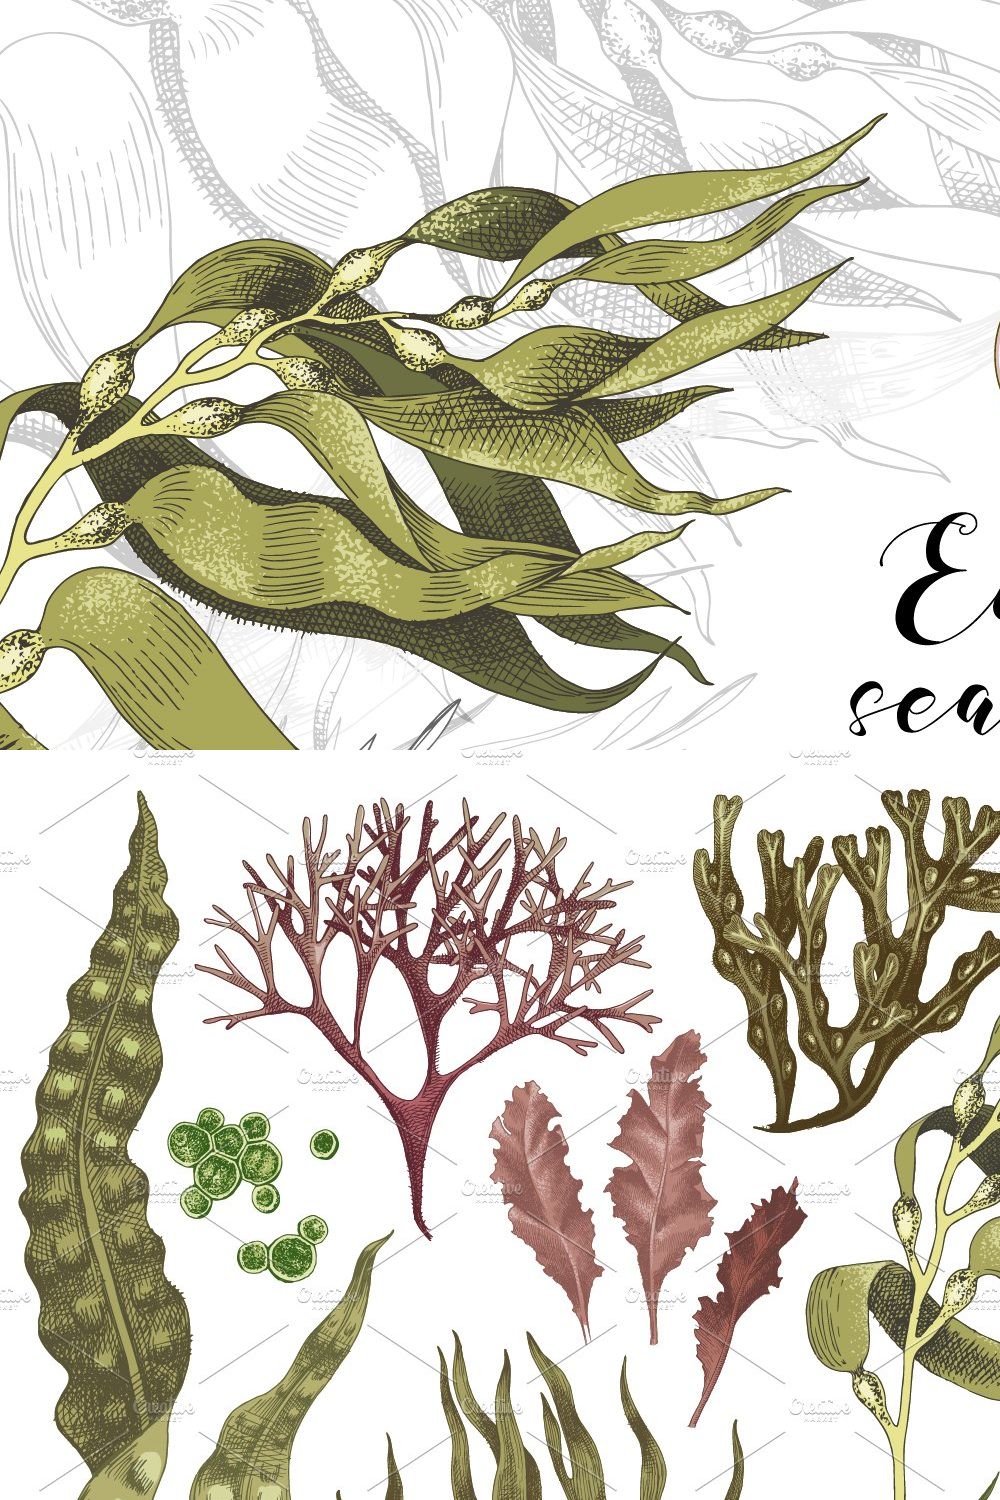 Hand drawn edible seaweeds pinterest preview image.